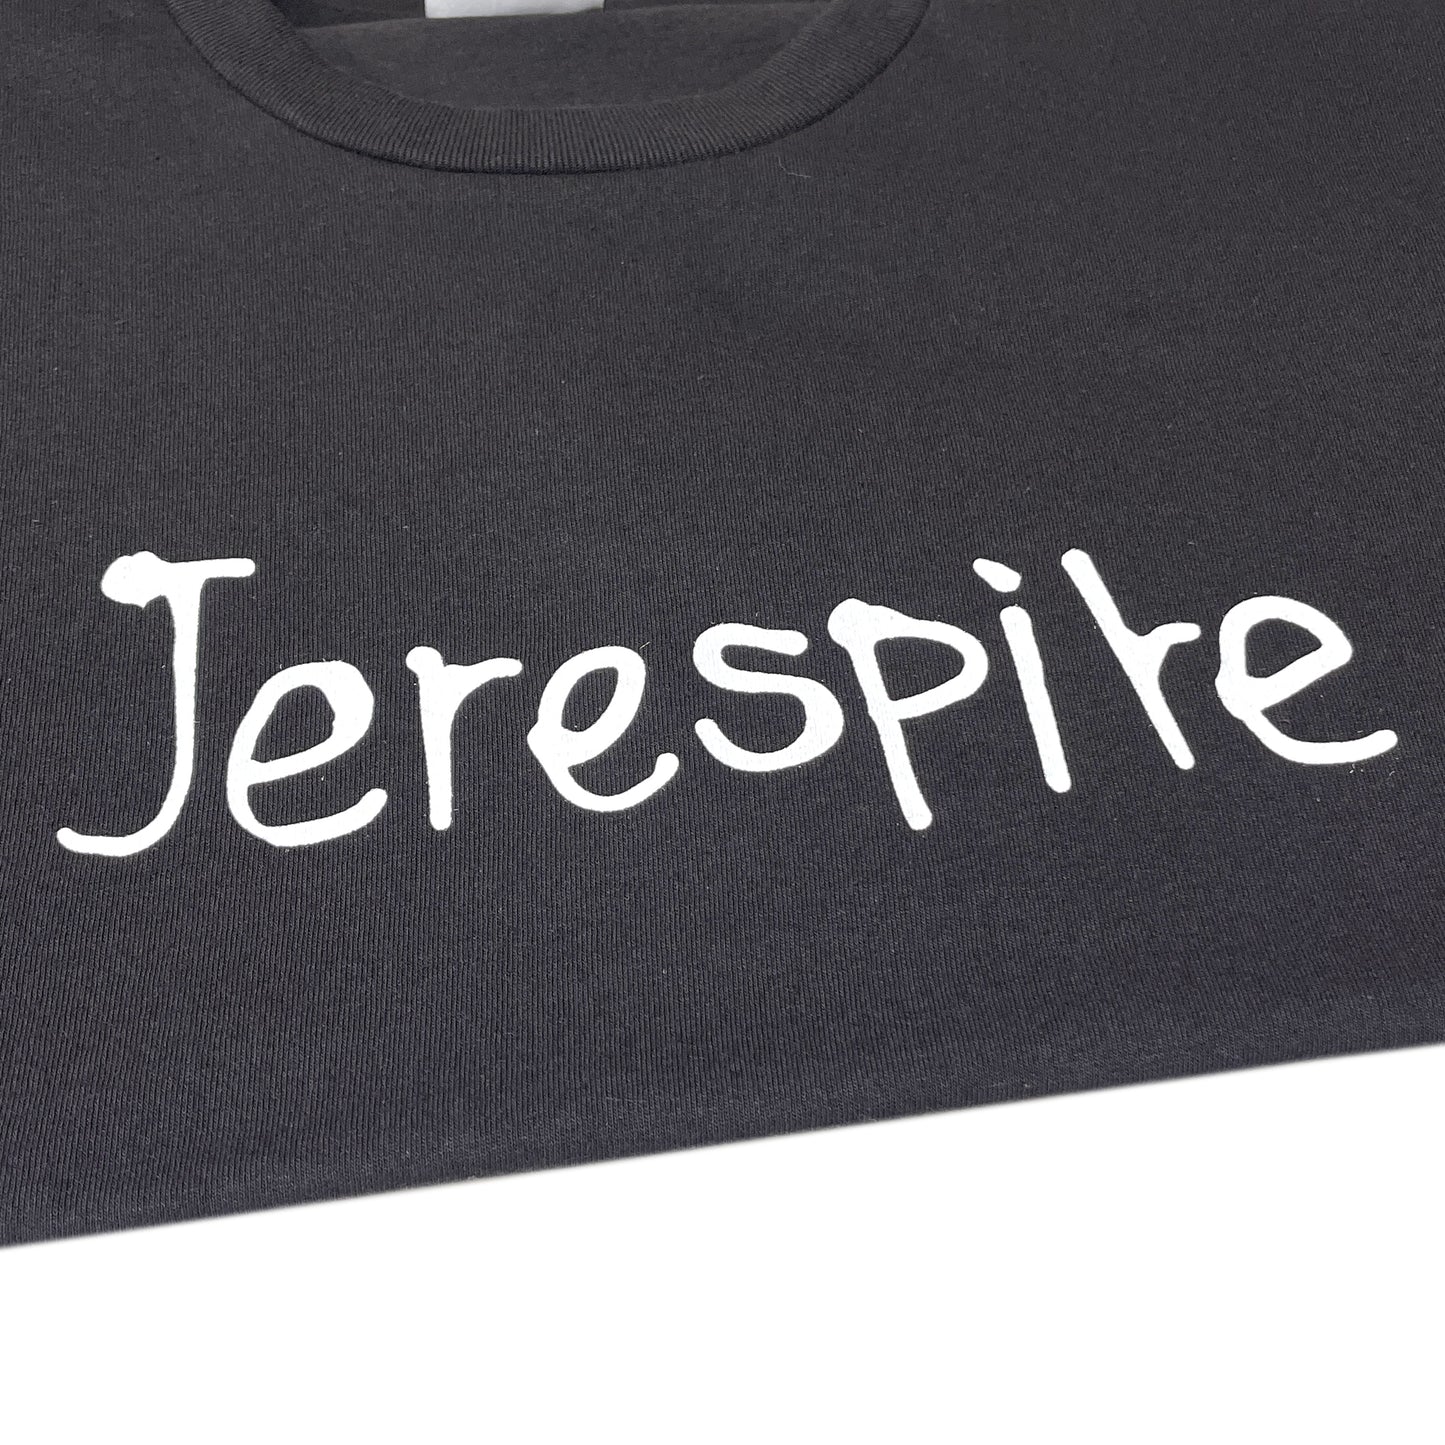 Frgeek Original "Jerespire" Logo Black T